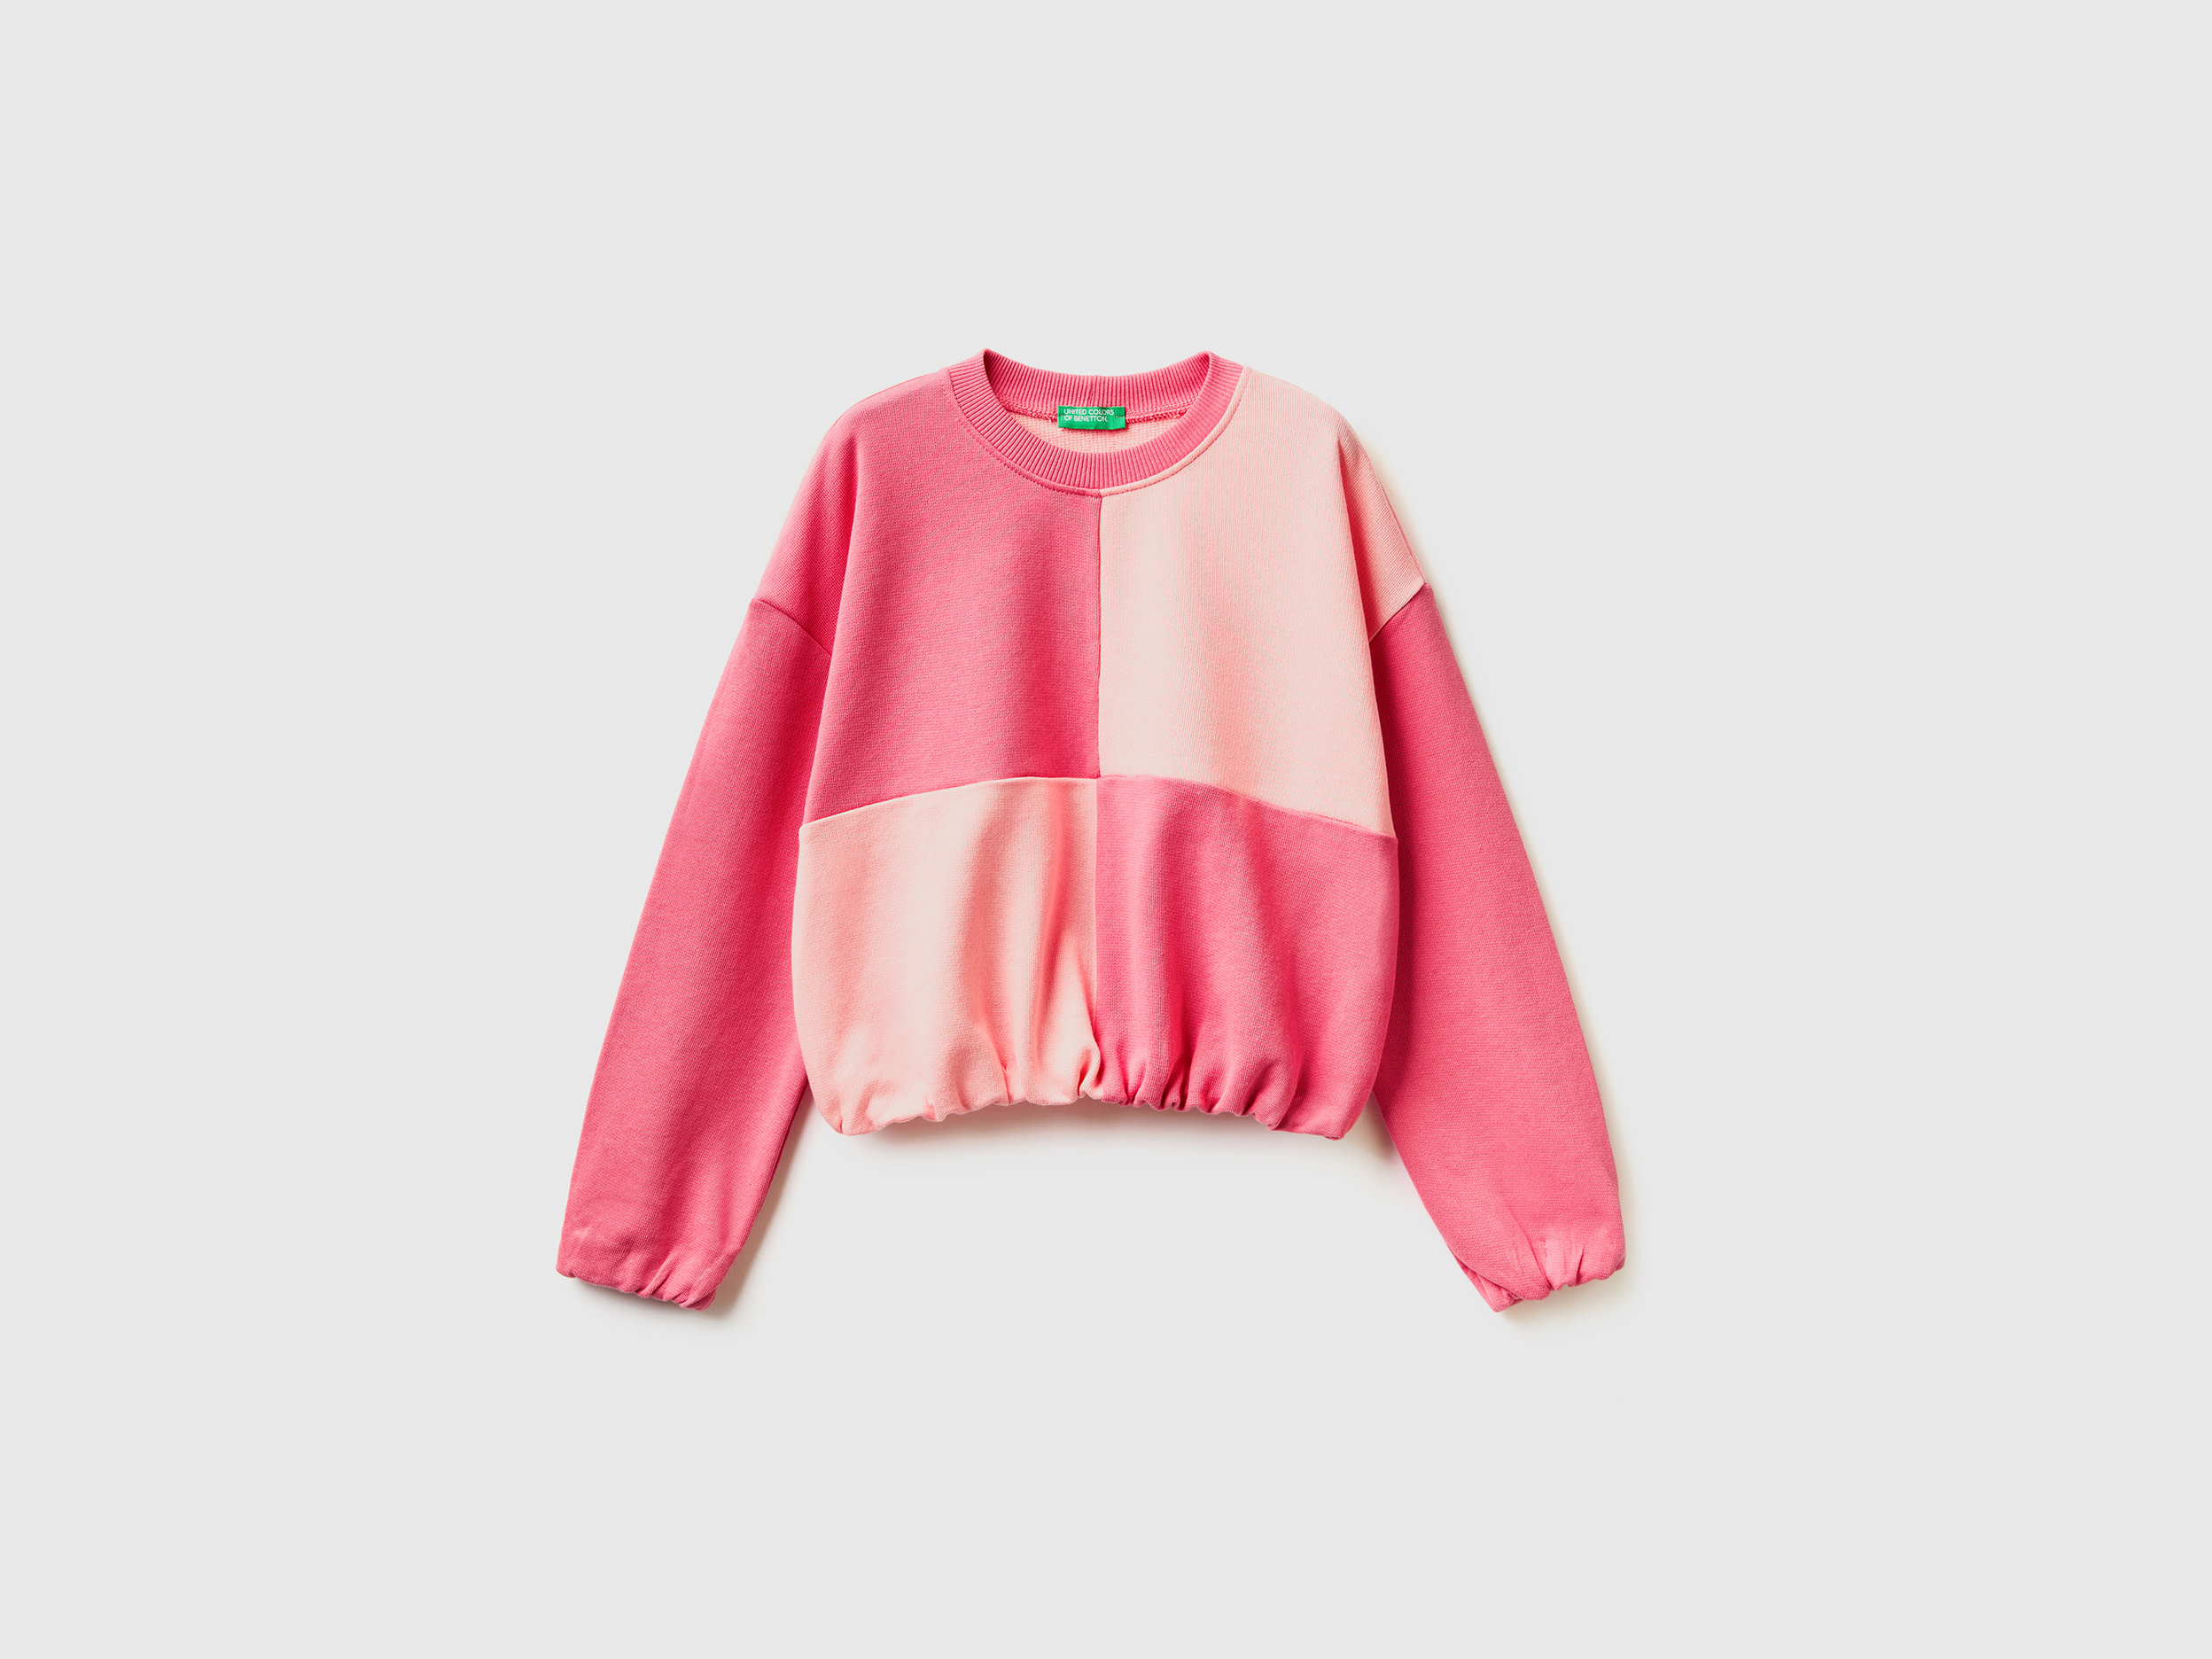 Benetton, Sweatshirt With Maxi Check, size 3XL, Pink, Kids